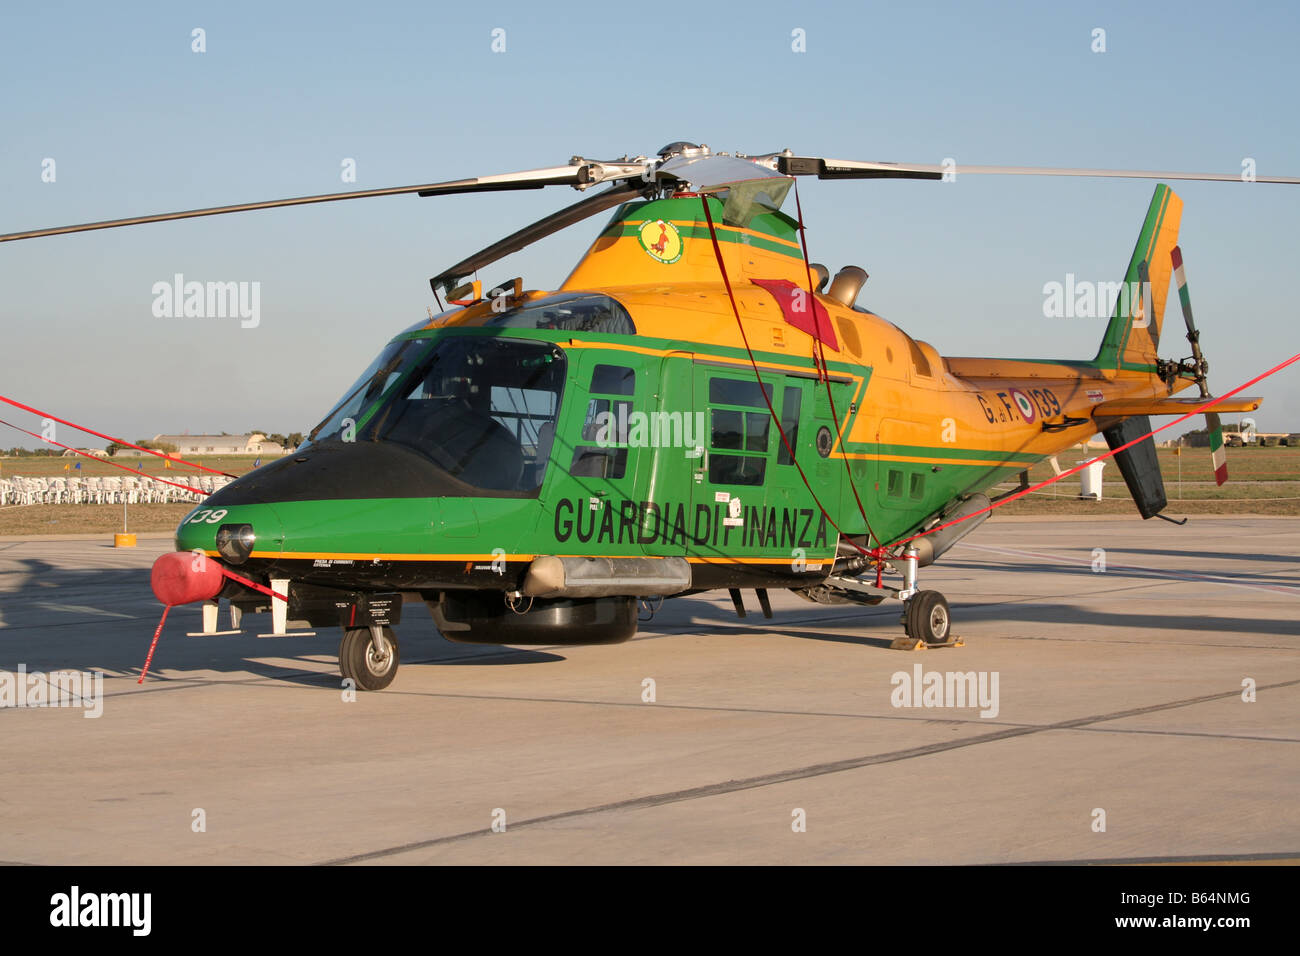 Agusta A109 helicopter of the Italian Guardia di Finanza or Customs Service Stock Photo